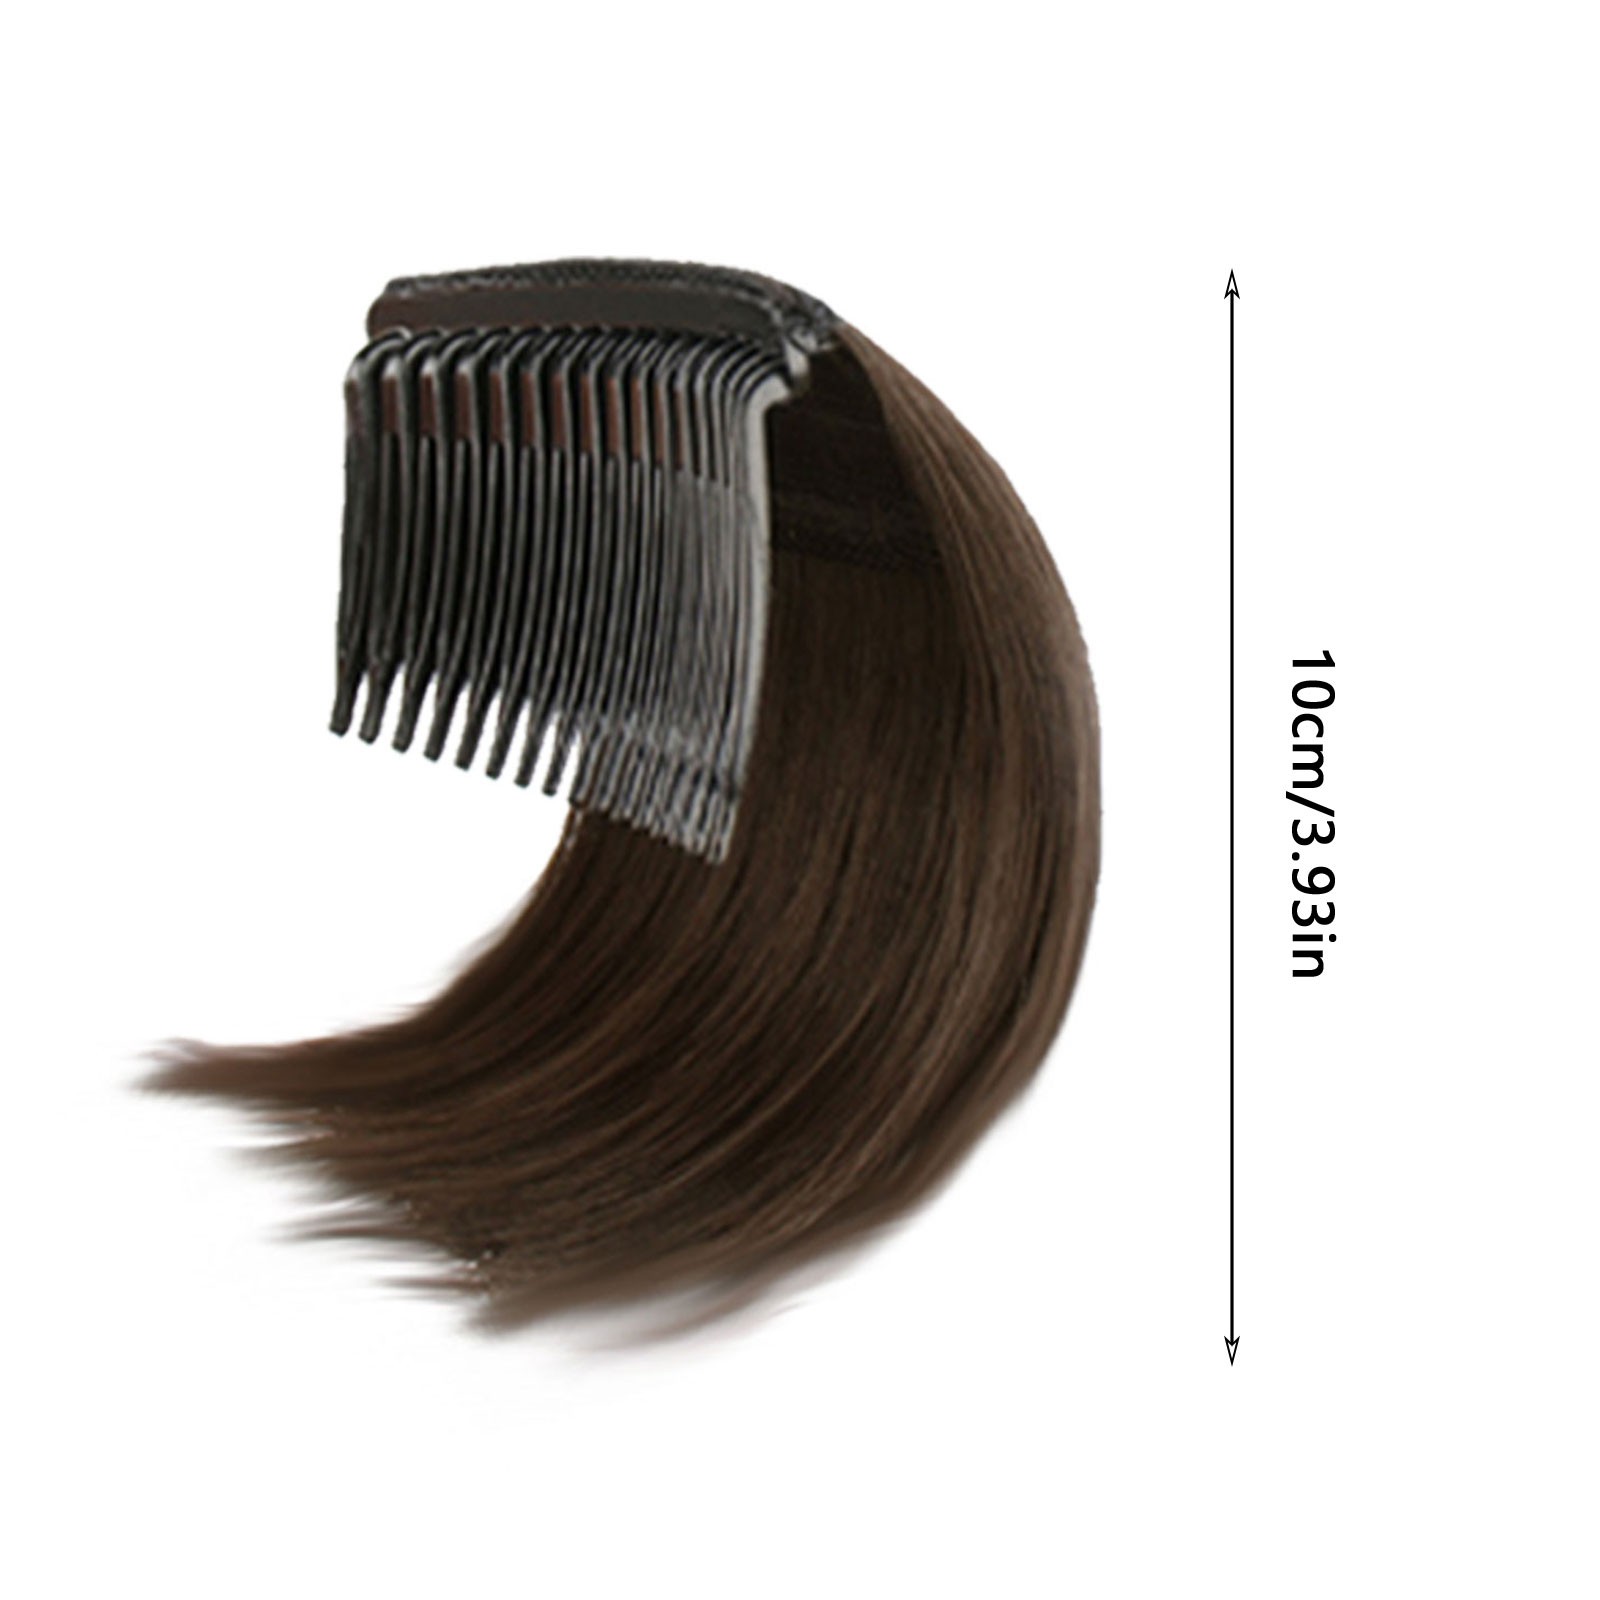 HSMQHJWE Hair Clip for Thick Hair Women Hair Puff Increase Female Pad Comb Comb Hair Hair Simulated Powder Hair Top Pad Wig Hair Pad Increase Lazy Baby Hair Accessories Clip - image 3 of 5